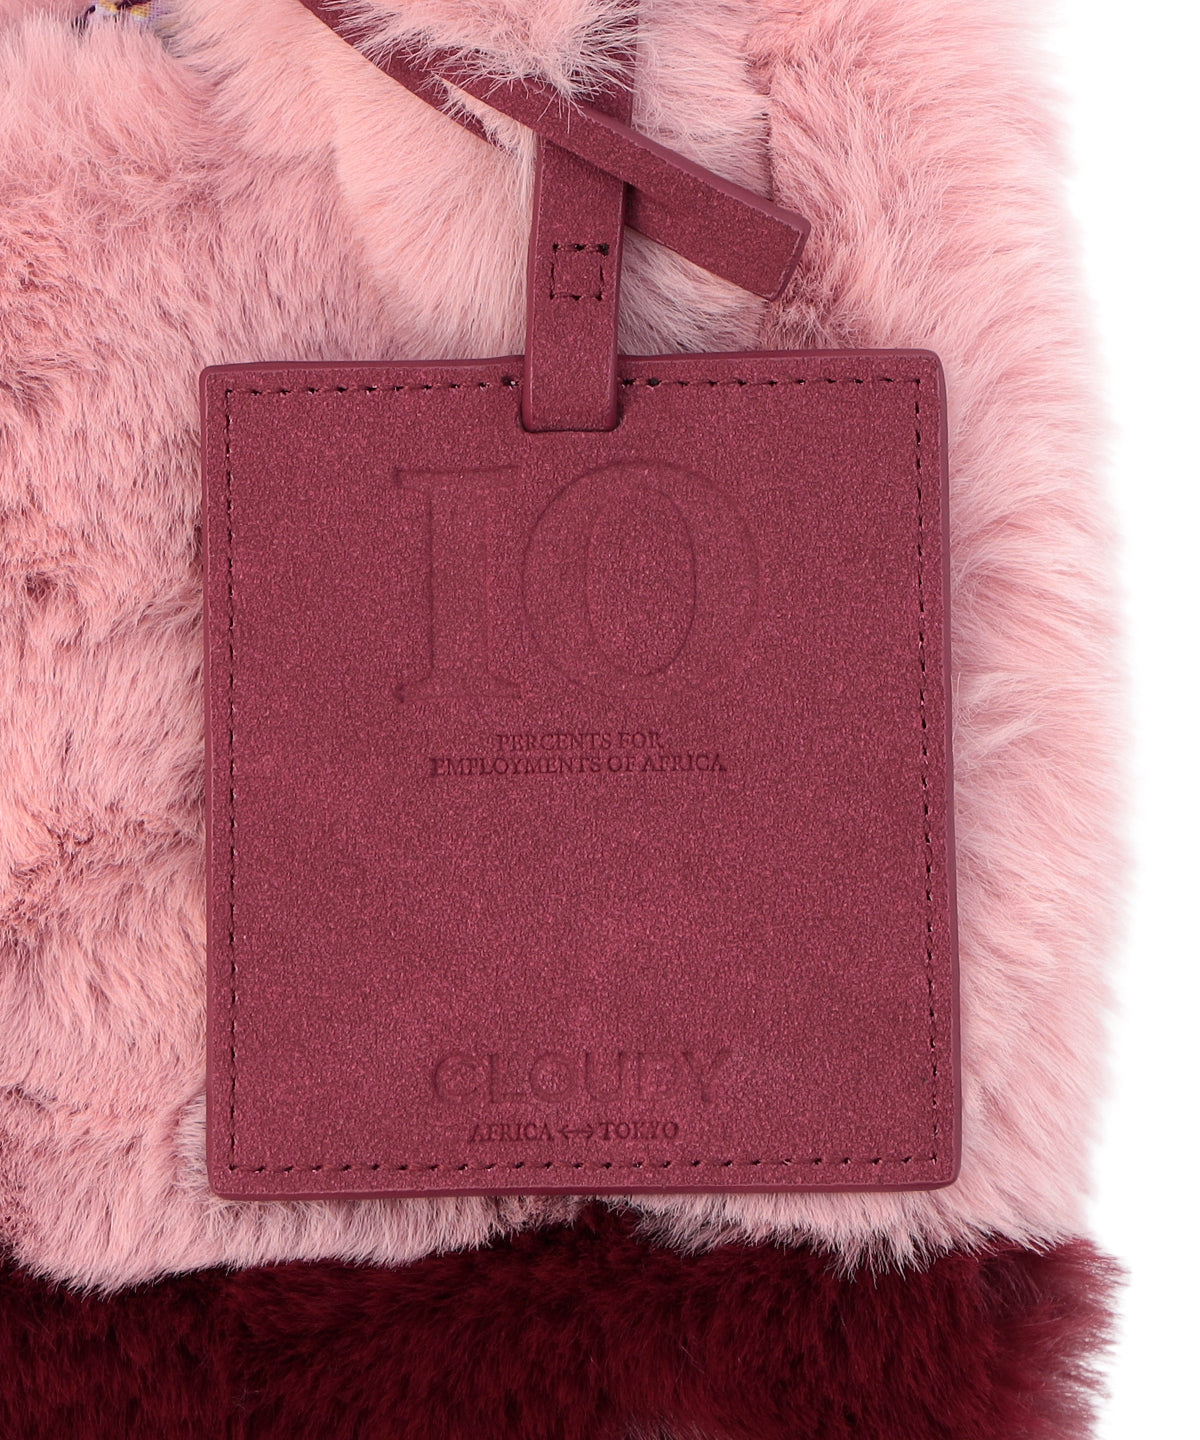 Eco Fur Convenience Bag (Small) PINK×BURGUNDY